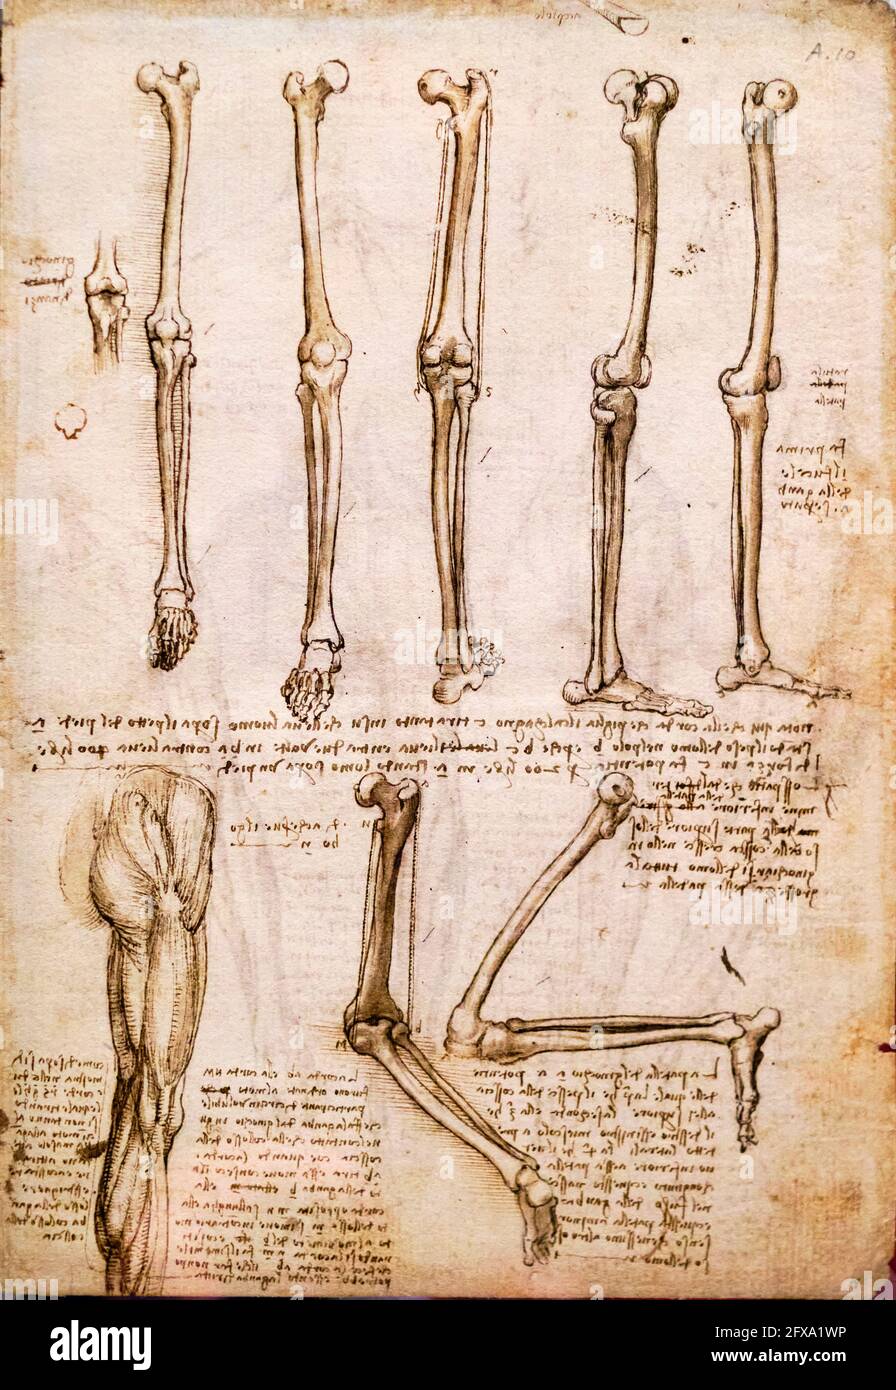 Leonardo da vinci anatomy hi-res stock photography and images - Alamy